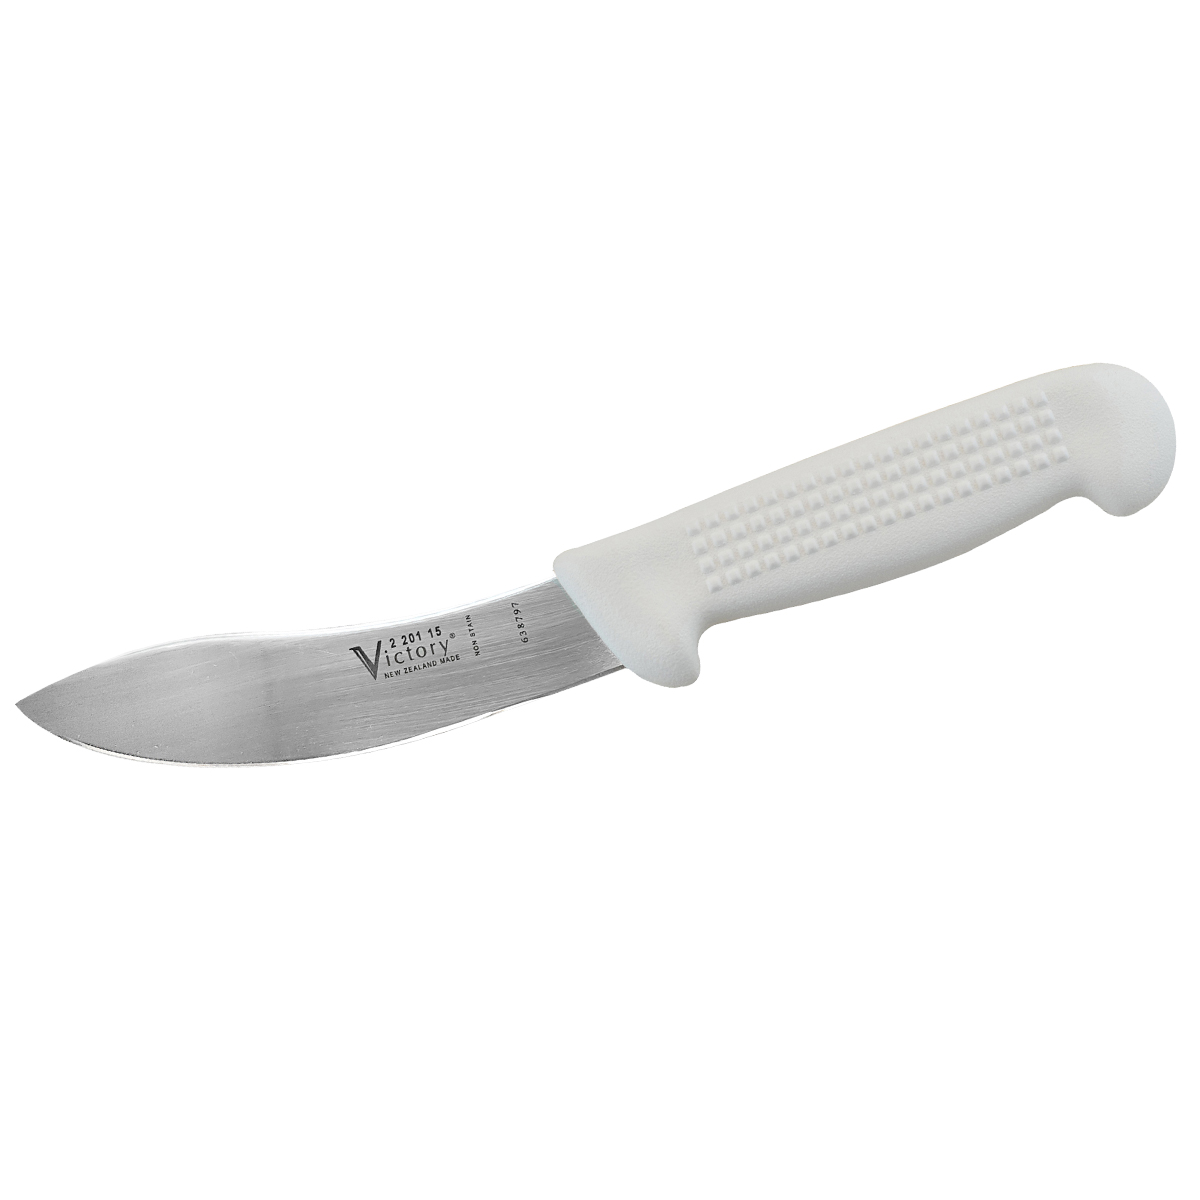 Victory Sheep Skinning Knife, 15cm (6") - White